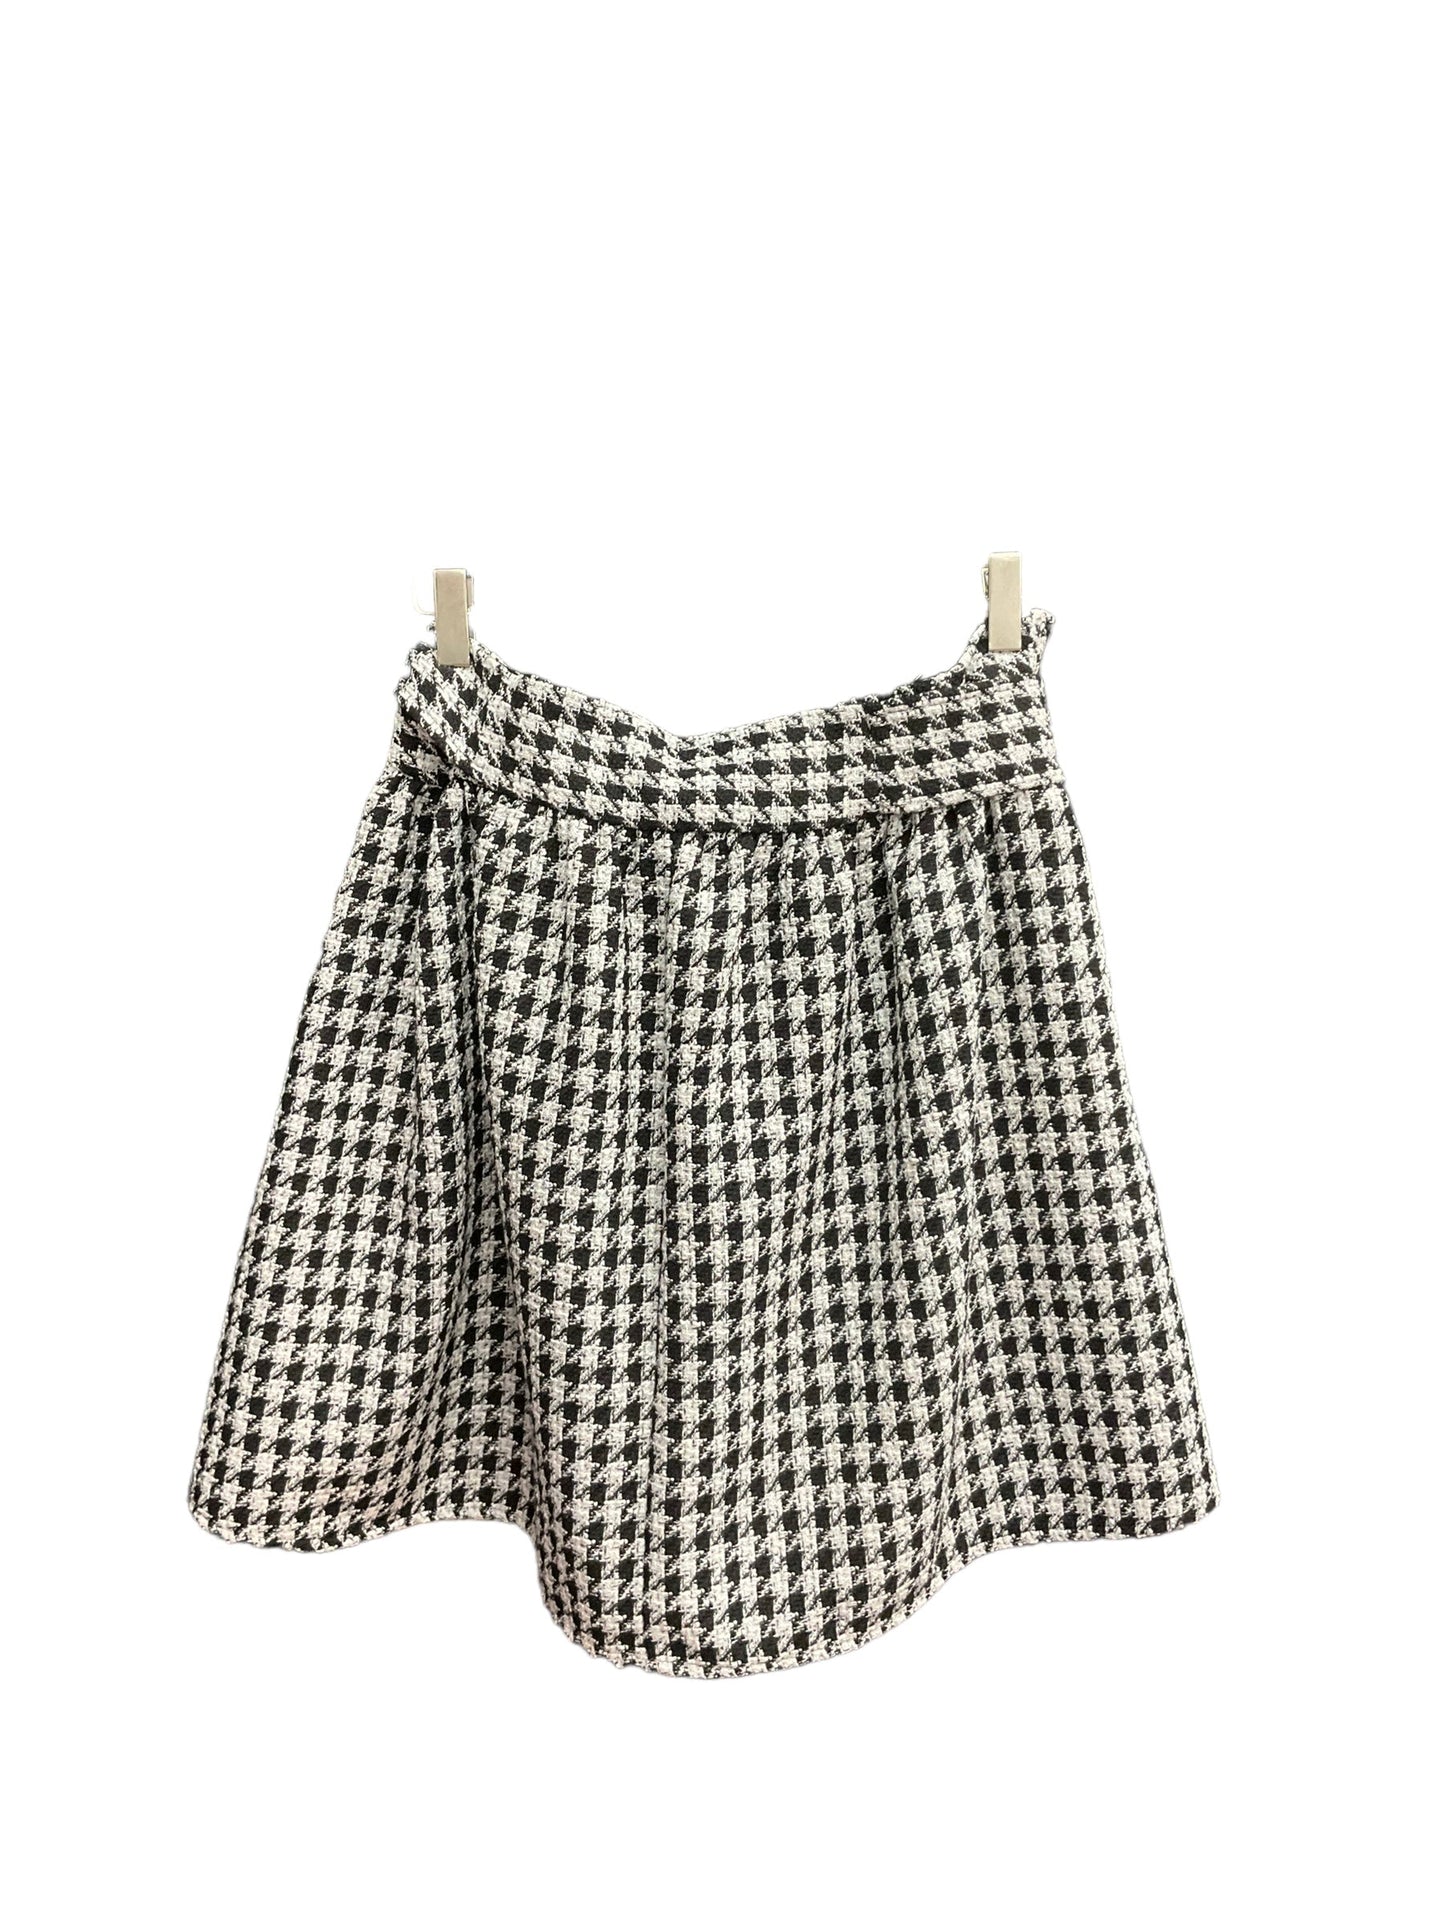 Black & White Skirt Mini & Short Express, Size 14